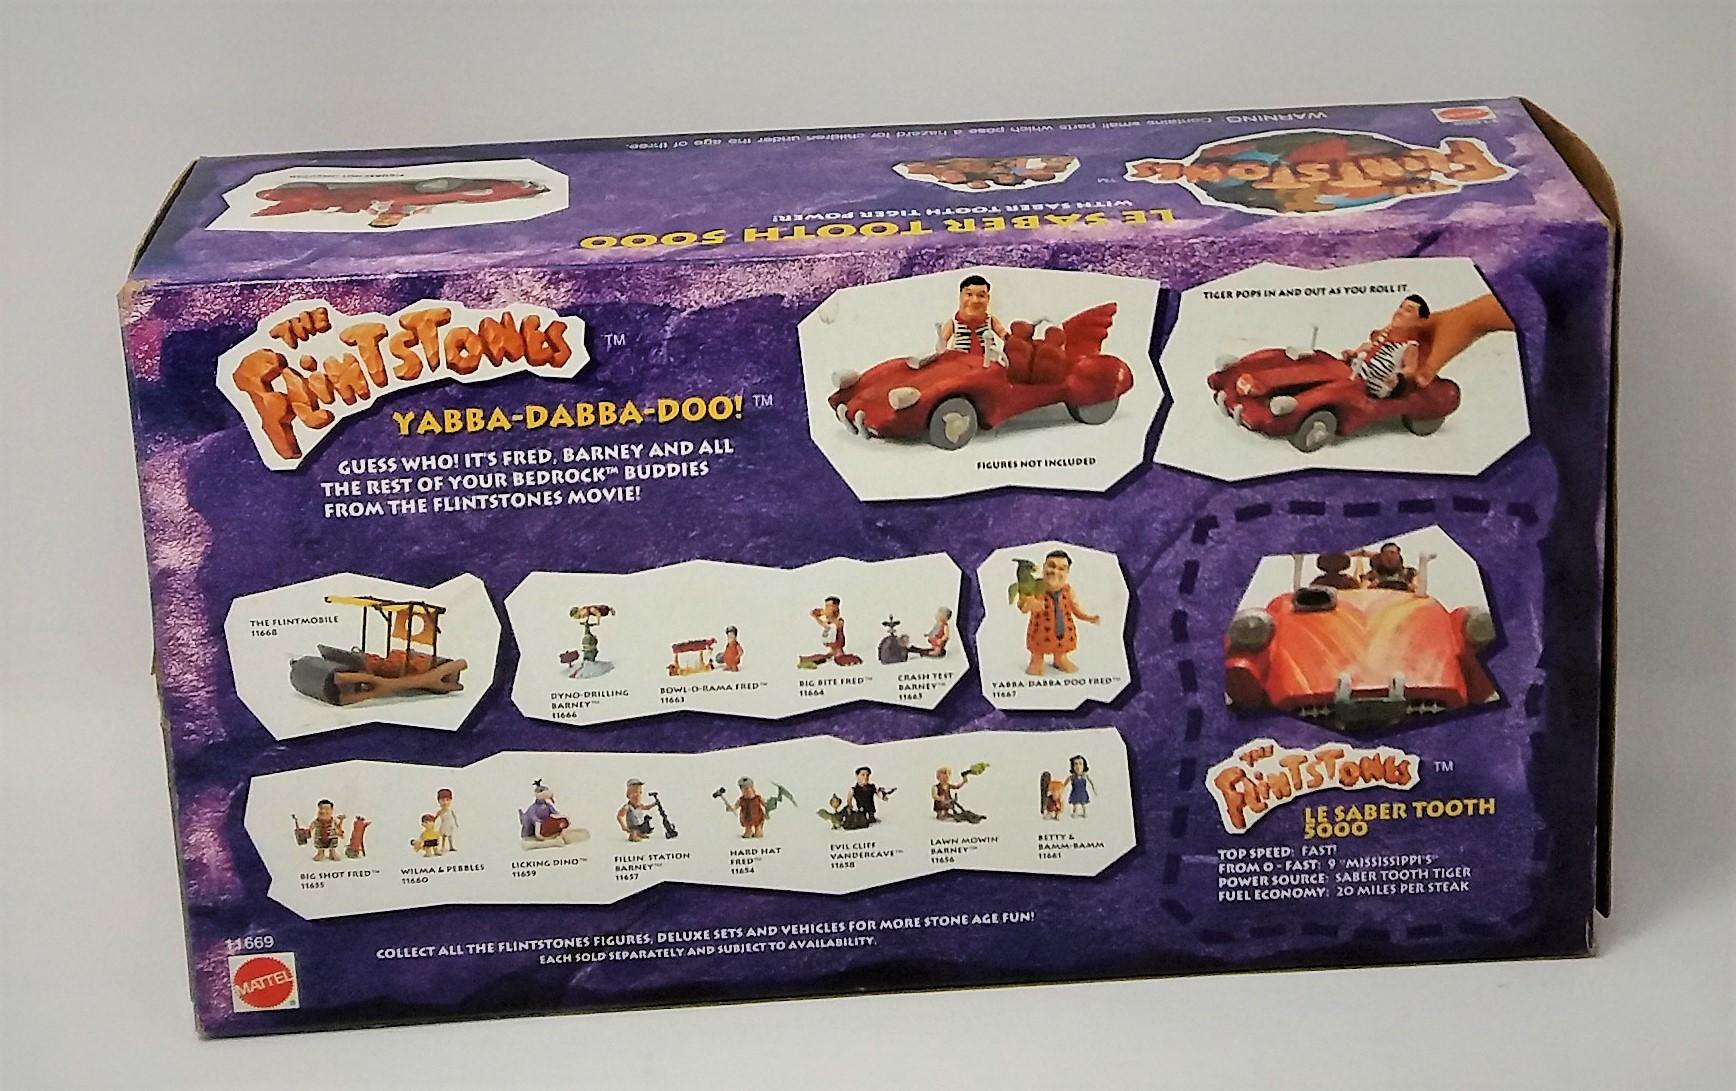 The Flintstones Le Saber Tooth 5000 Action Figure Vehicle